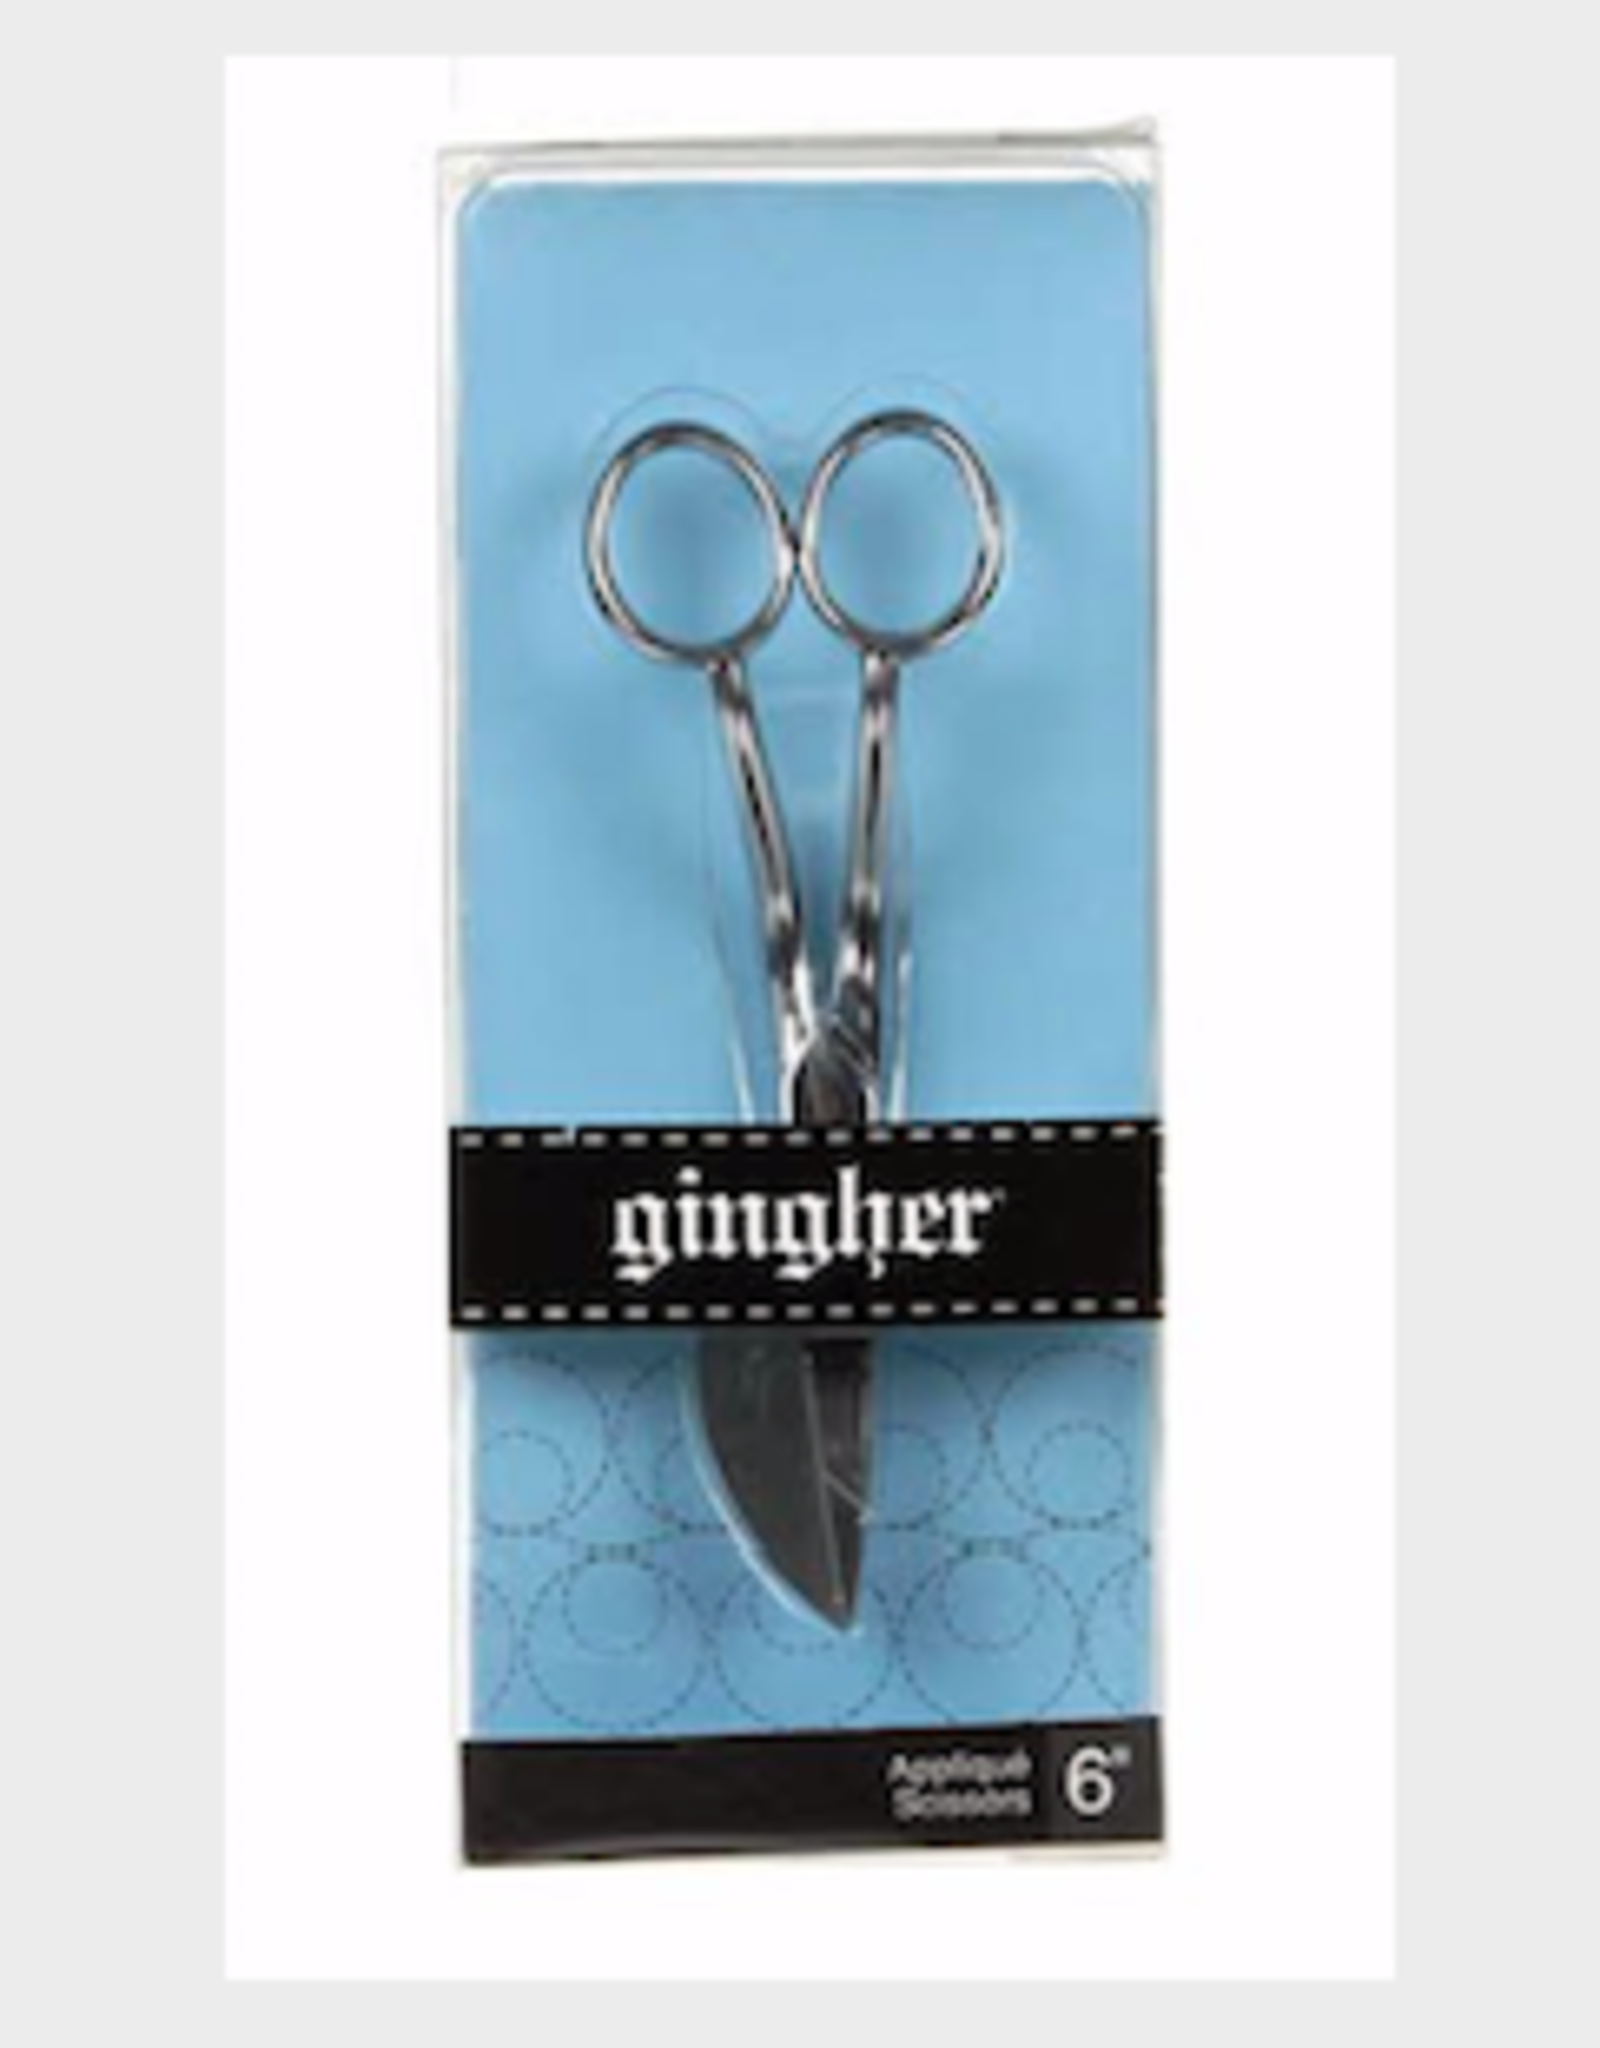 Gingher Gingher 6” Appliqué Scissors